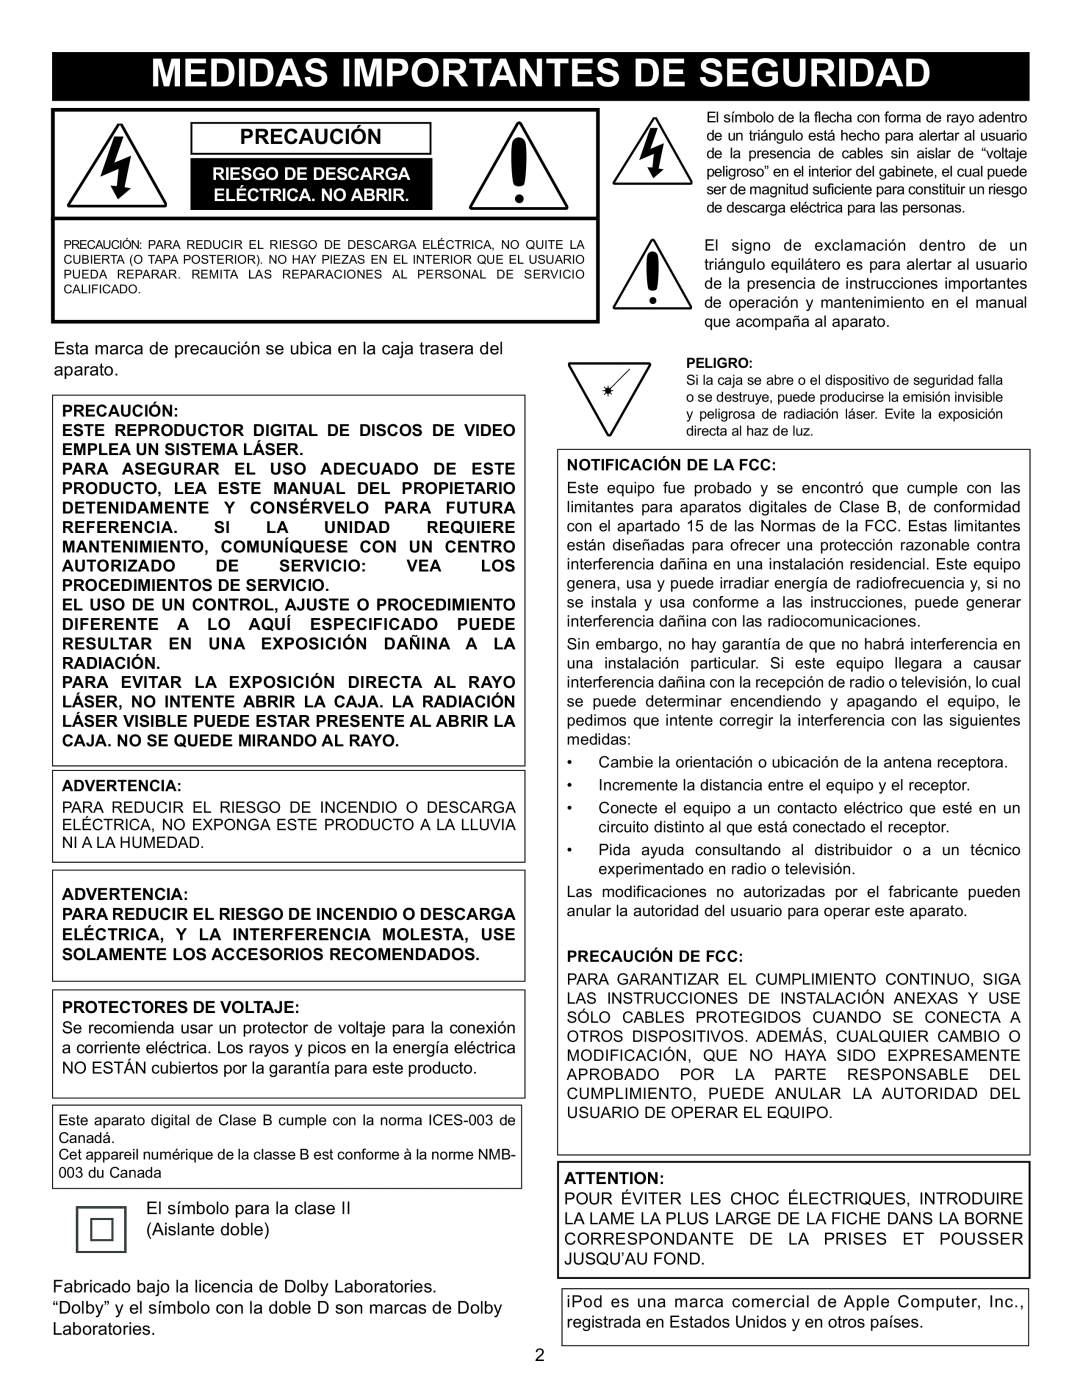 Memorex MIHT5005 manual Precaución, Riesgo De Descarga, Eléctrica.No Abrir 